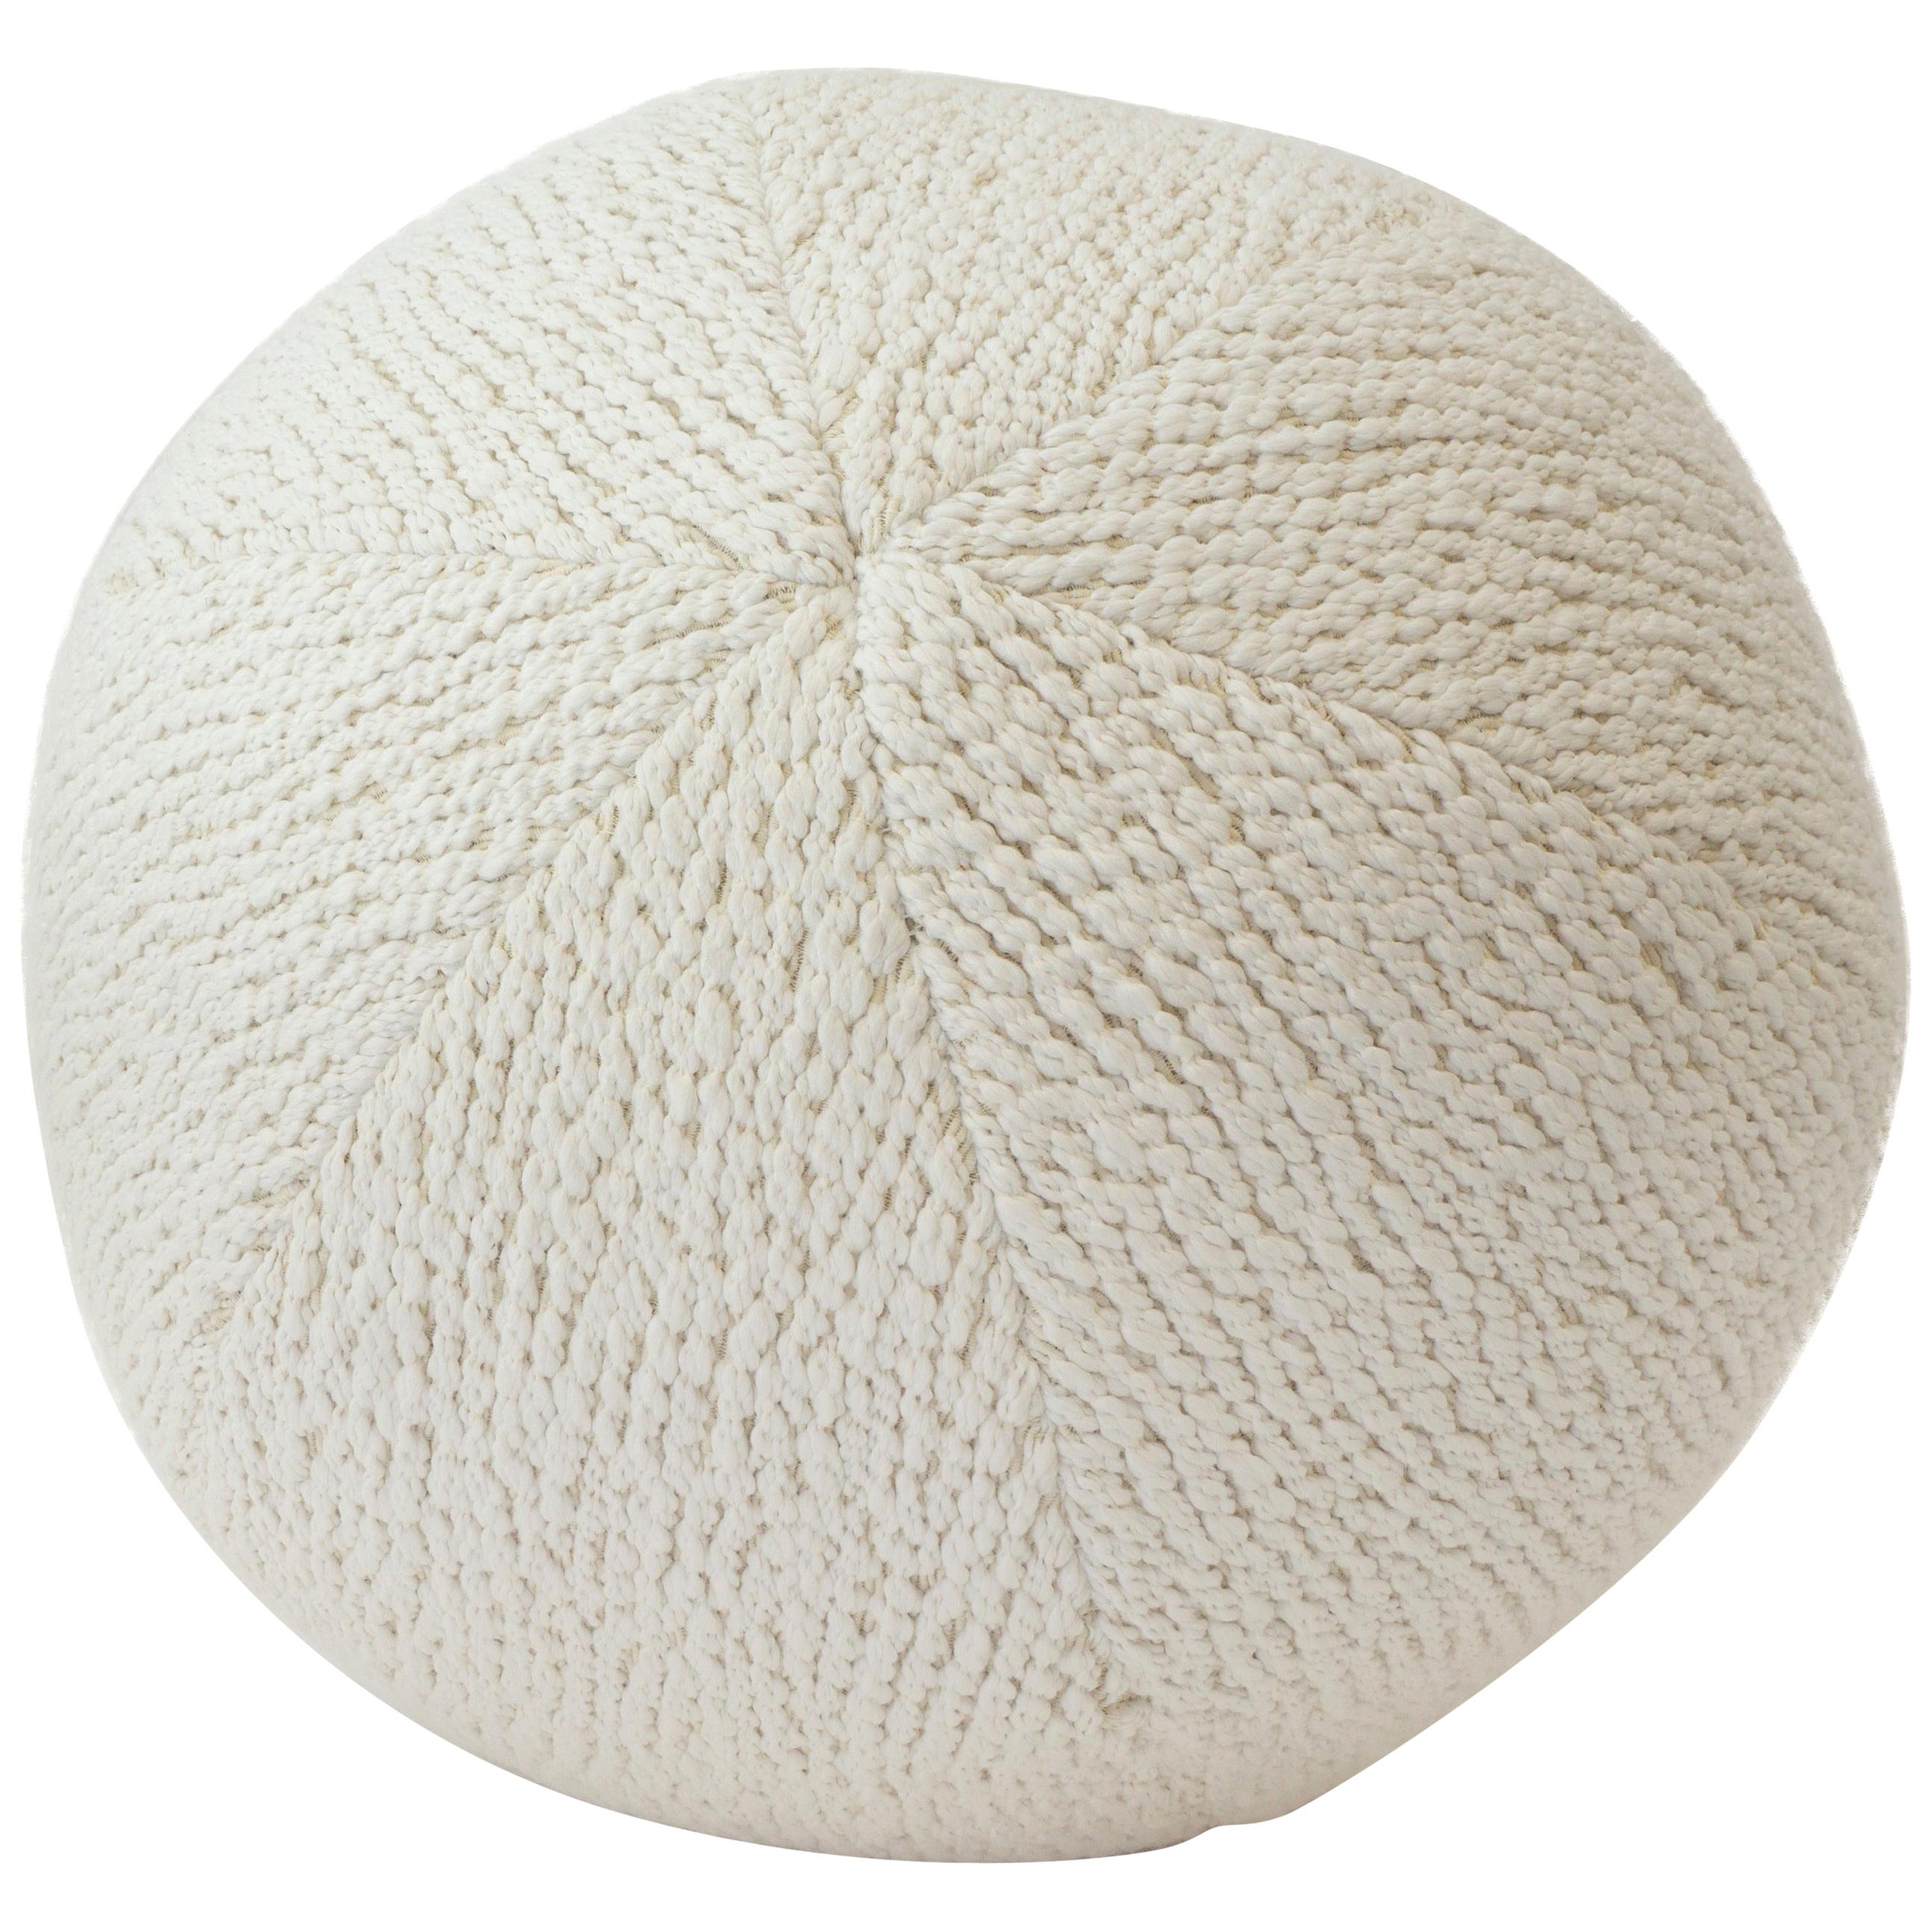 Cream and White Braided Wool Ball Pillow